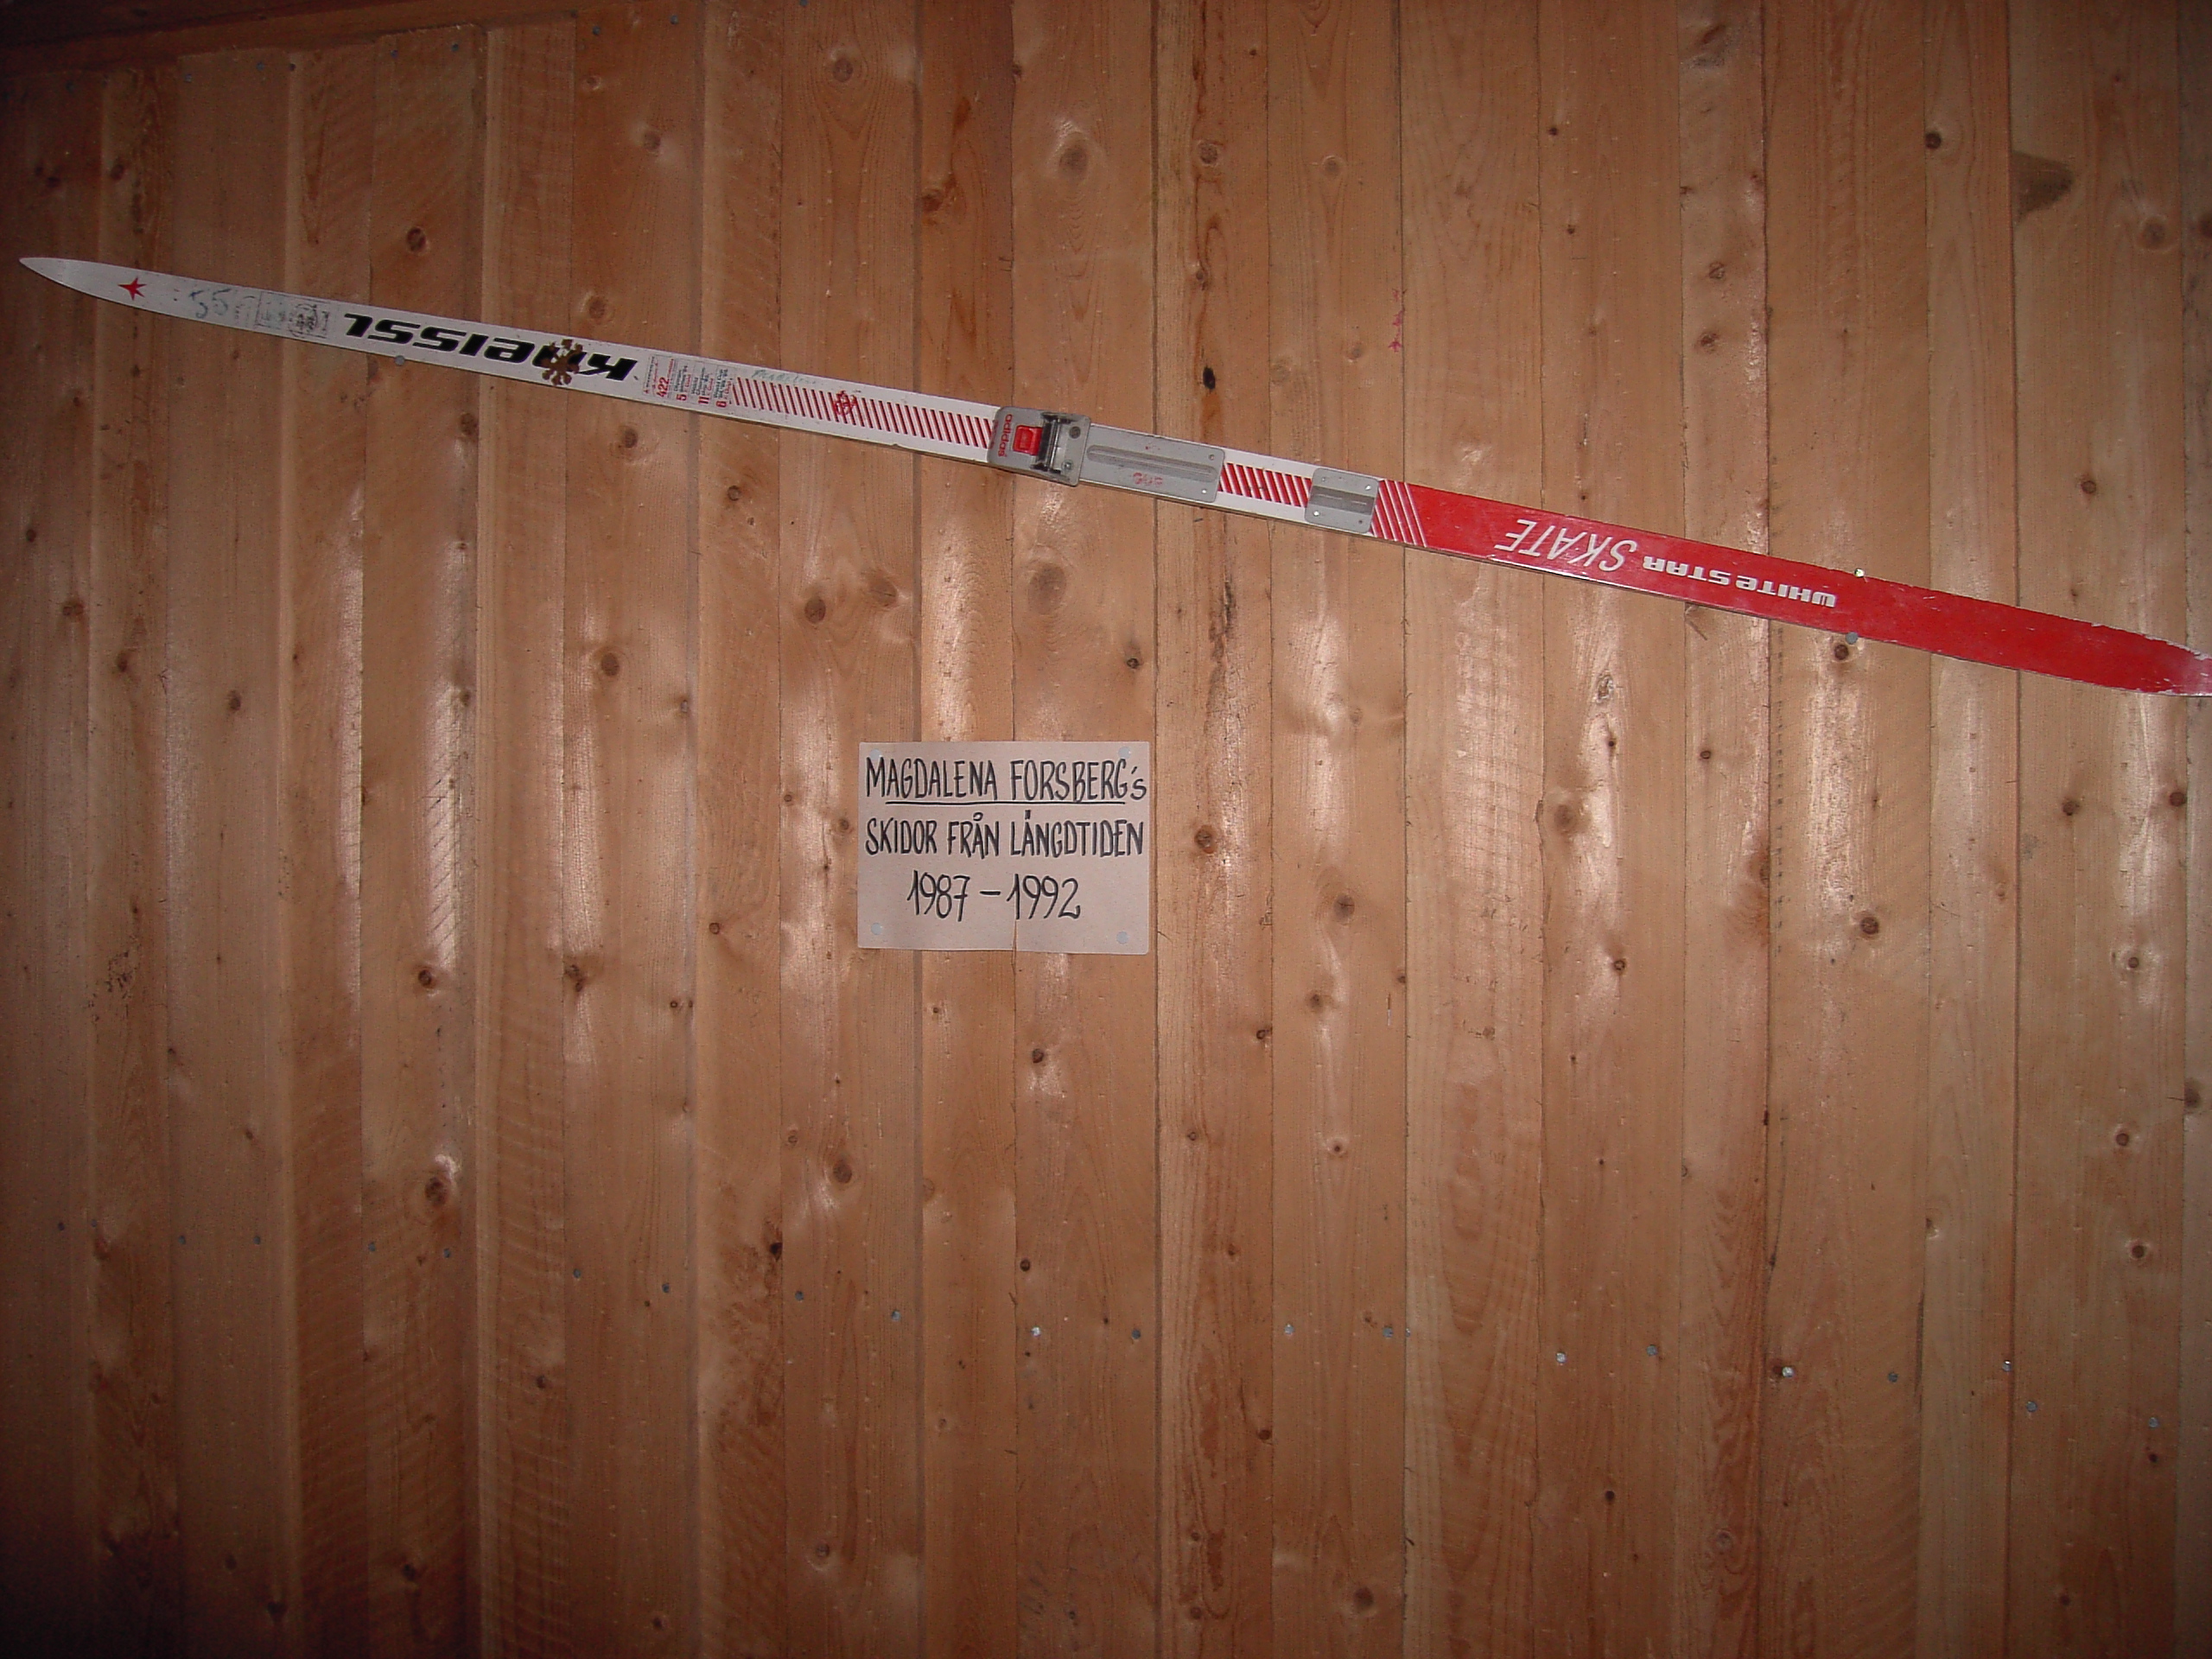 Vr stora skidskytt Magadalen Forsbergs skidor finns hr i det fina rummet fr skidor